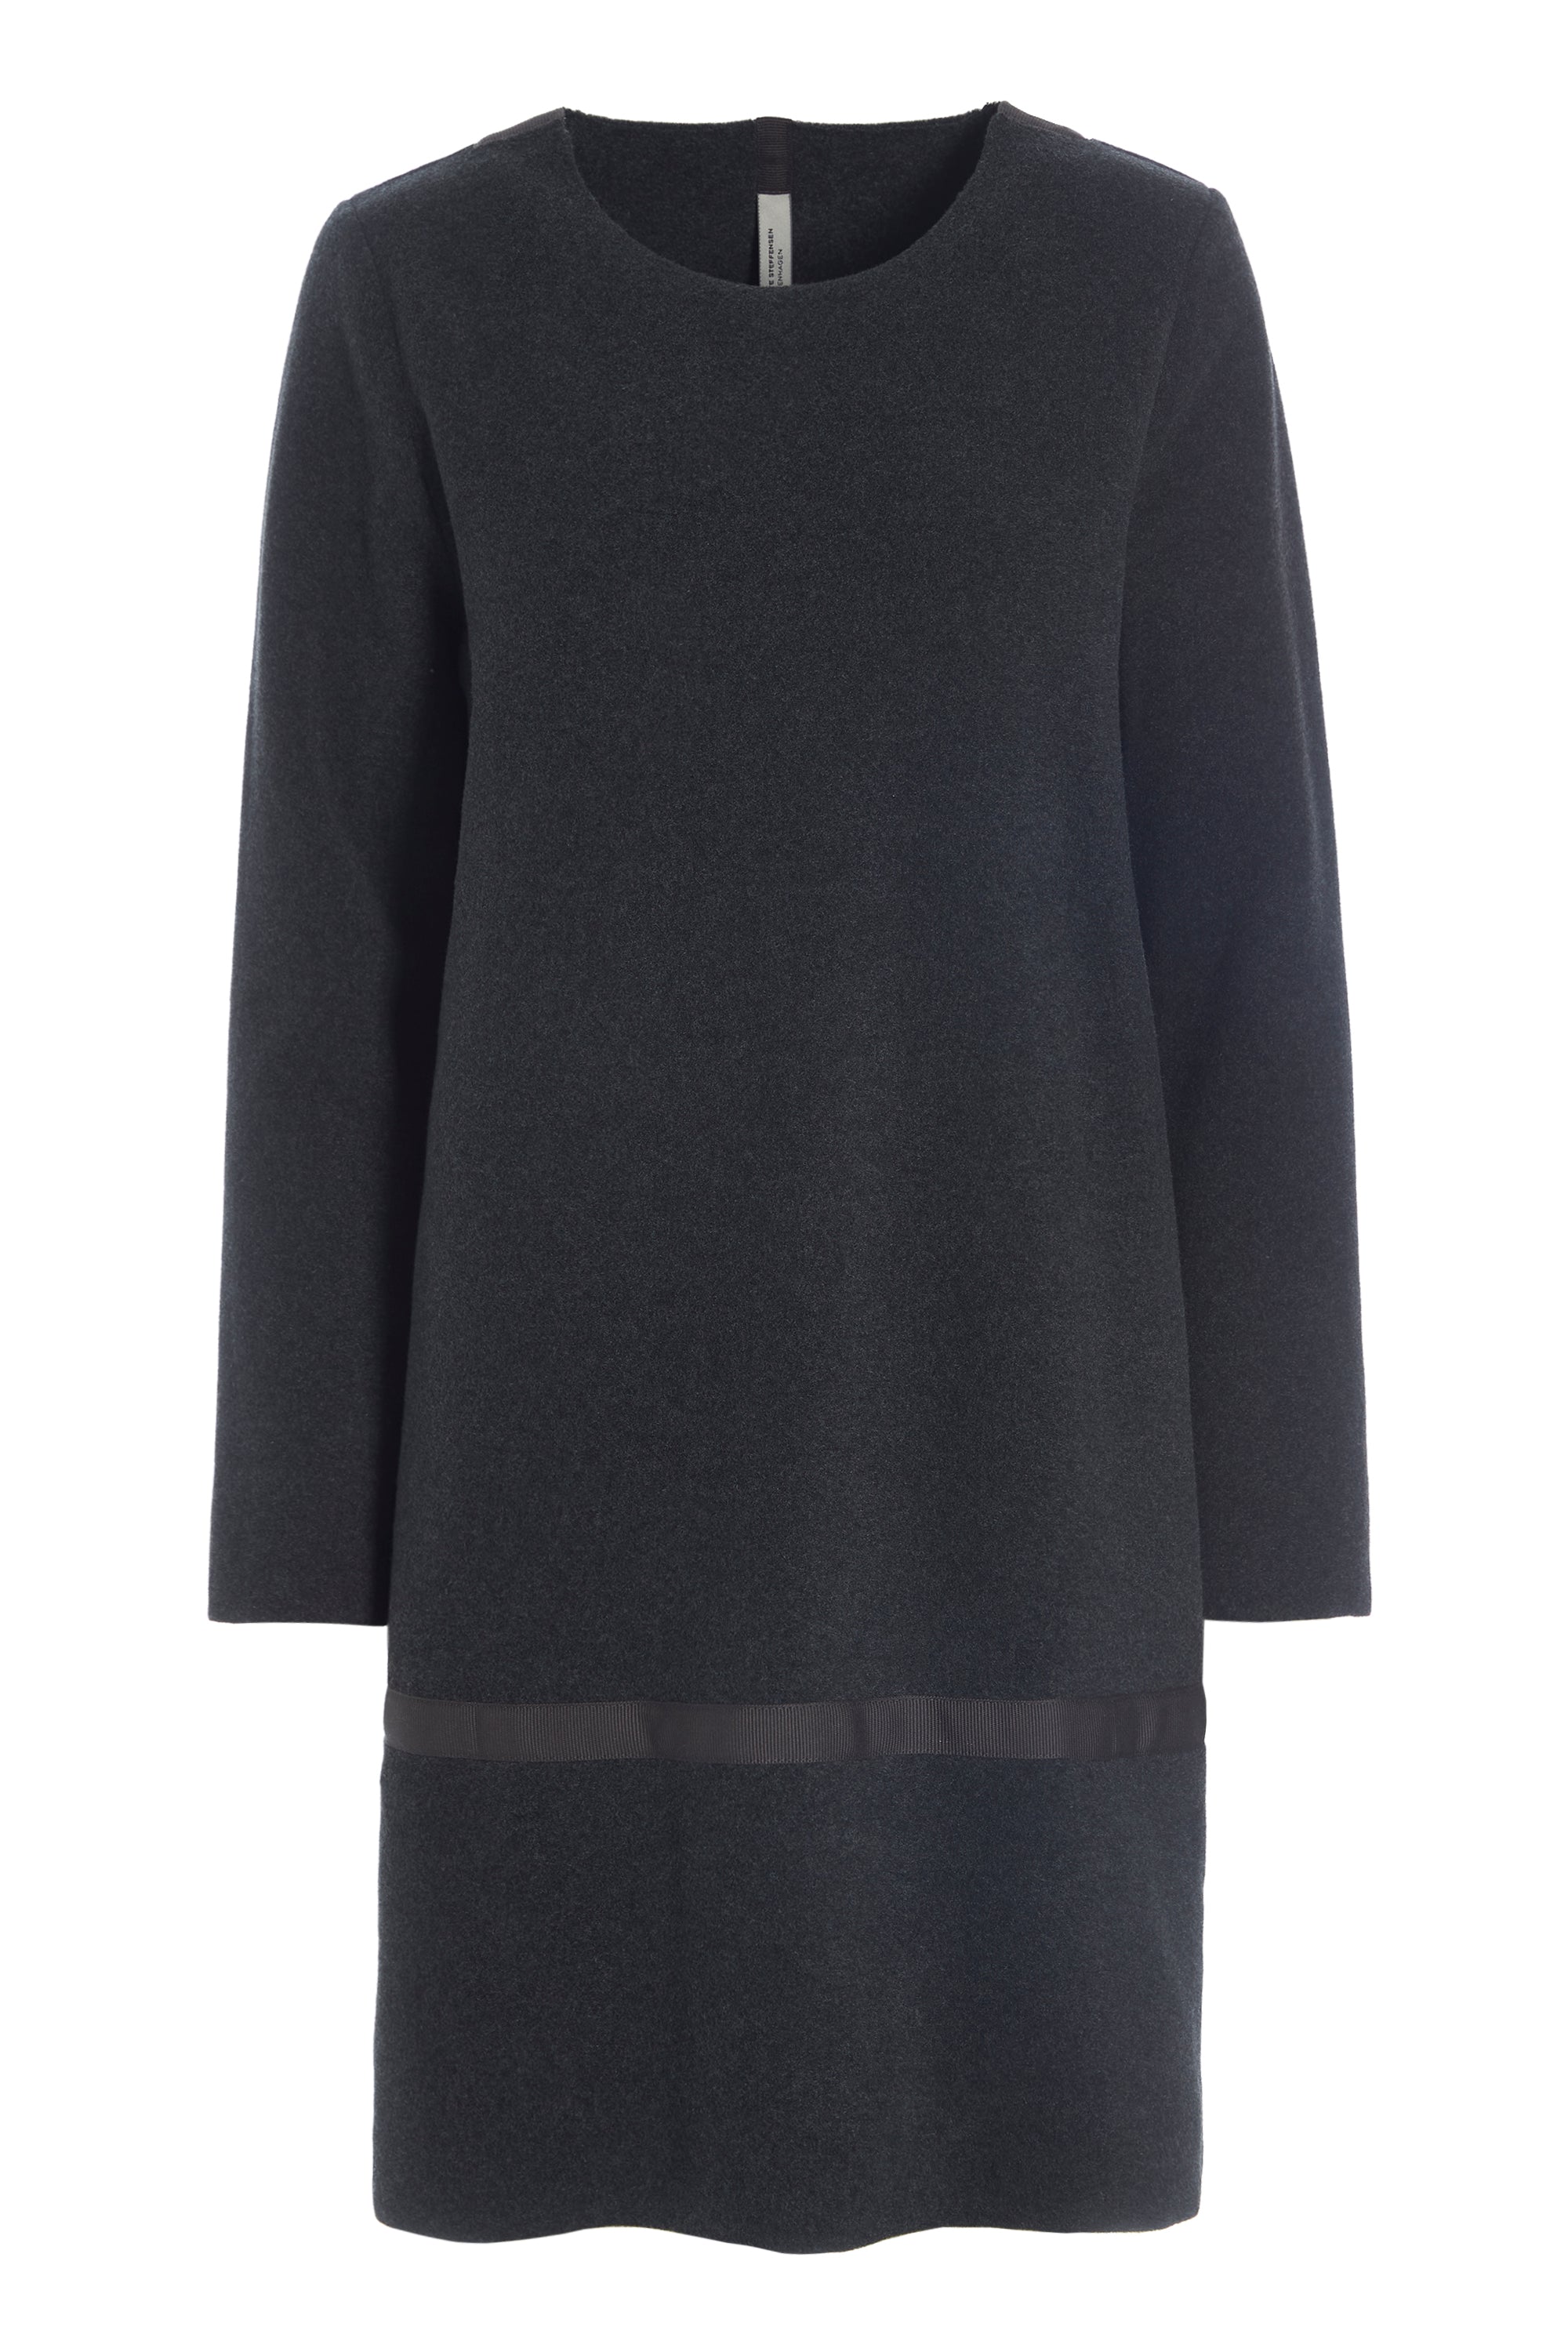 HENRIETTE STEFFENSEN COPENHAGEN KLEID - 3245 DRESSES fleece SOFT BLACK 914